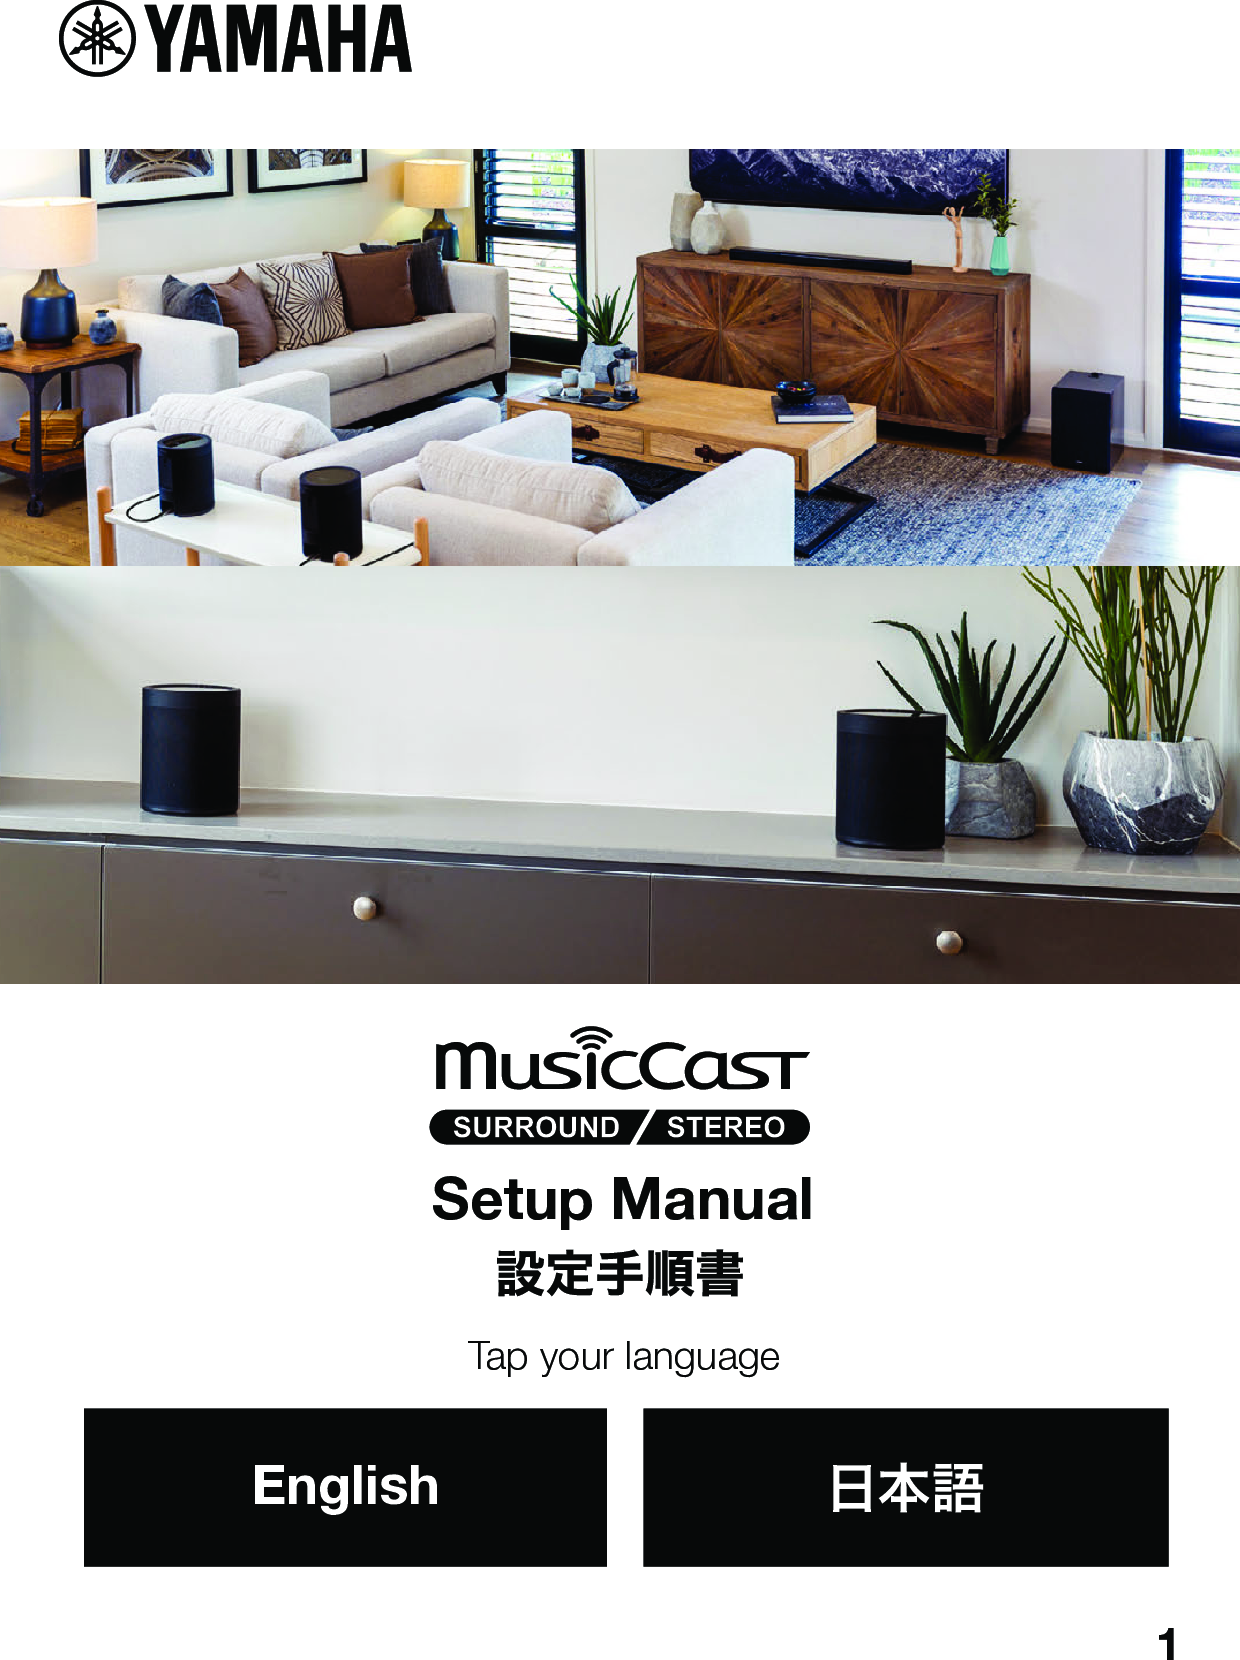 musiccast surround setup